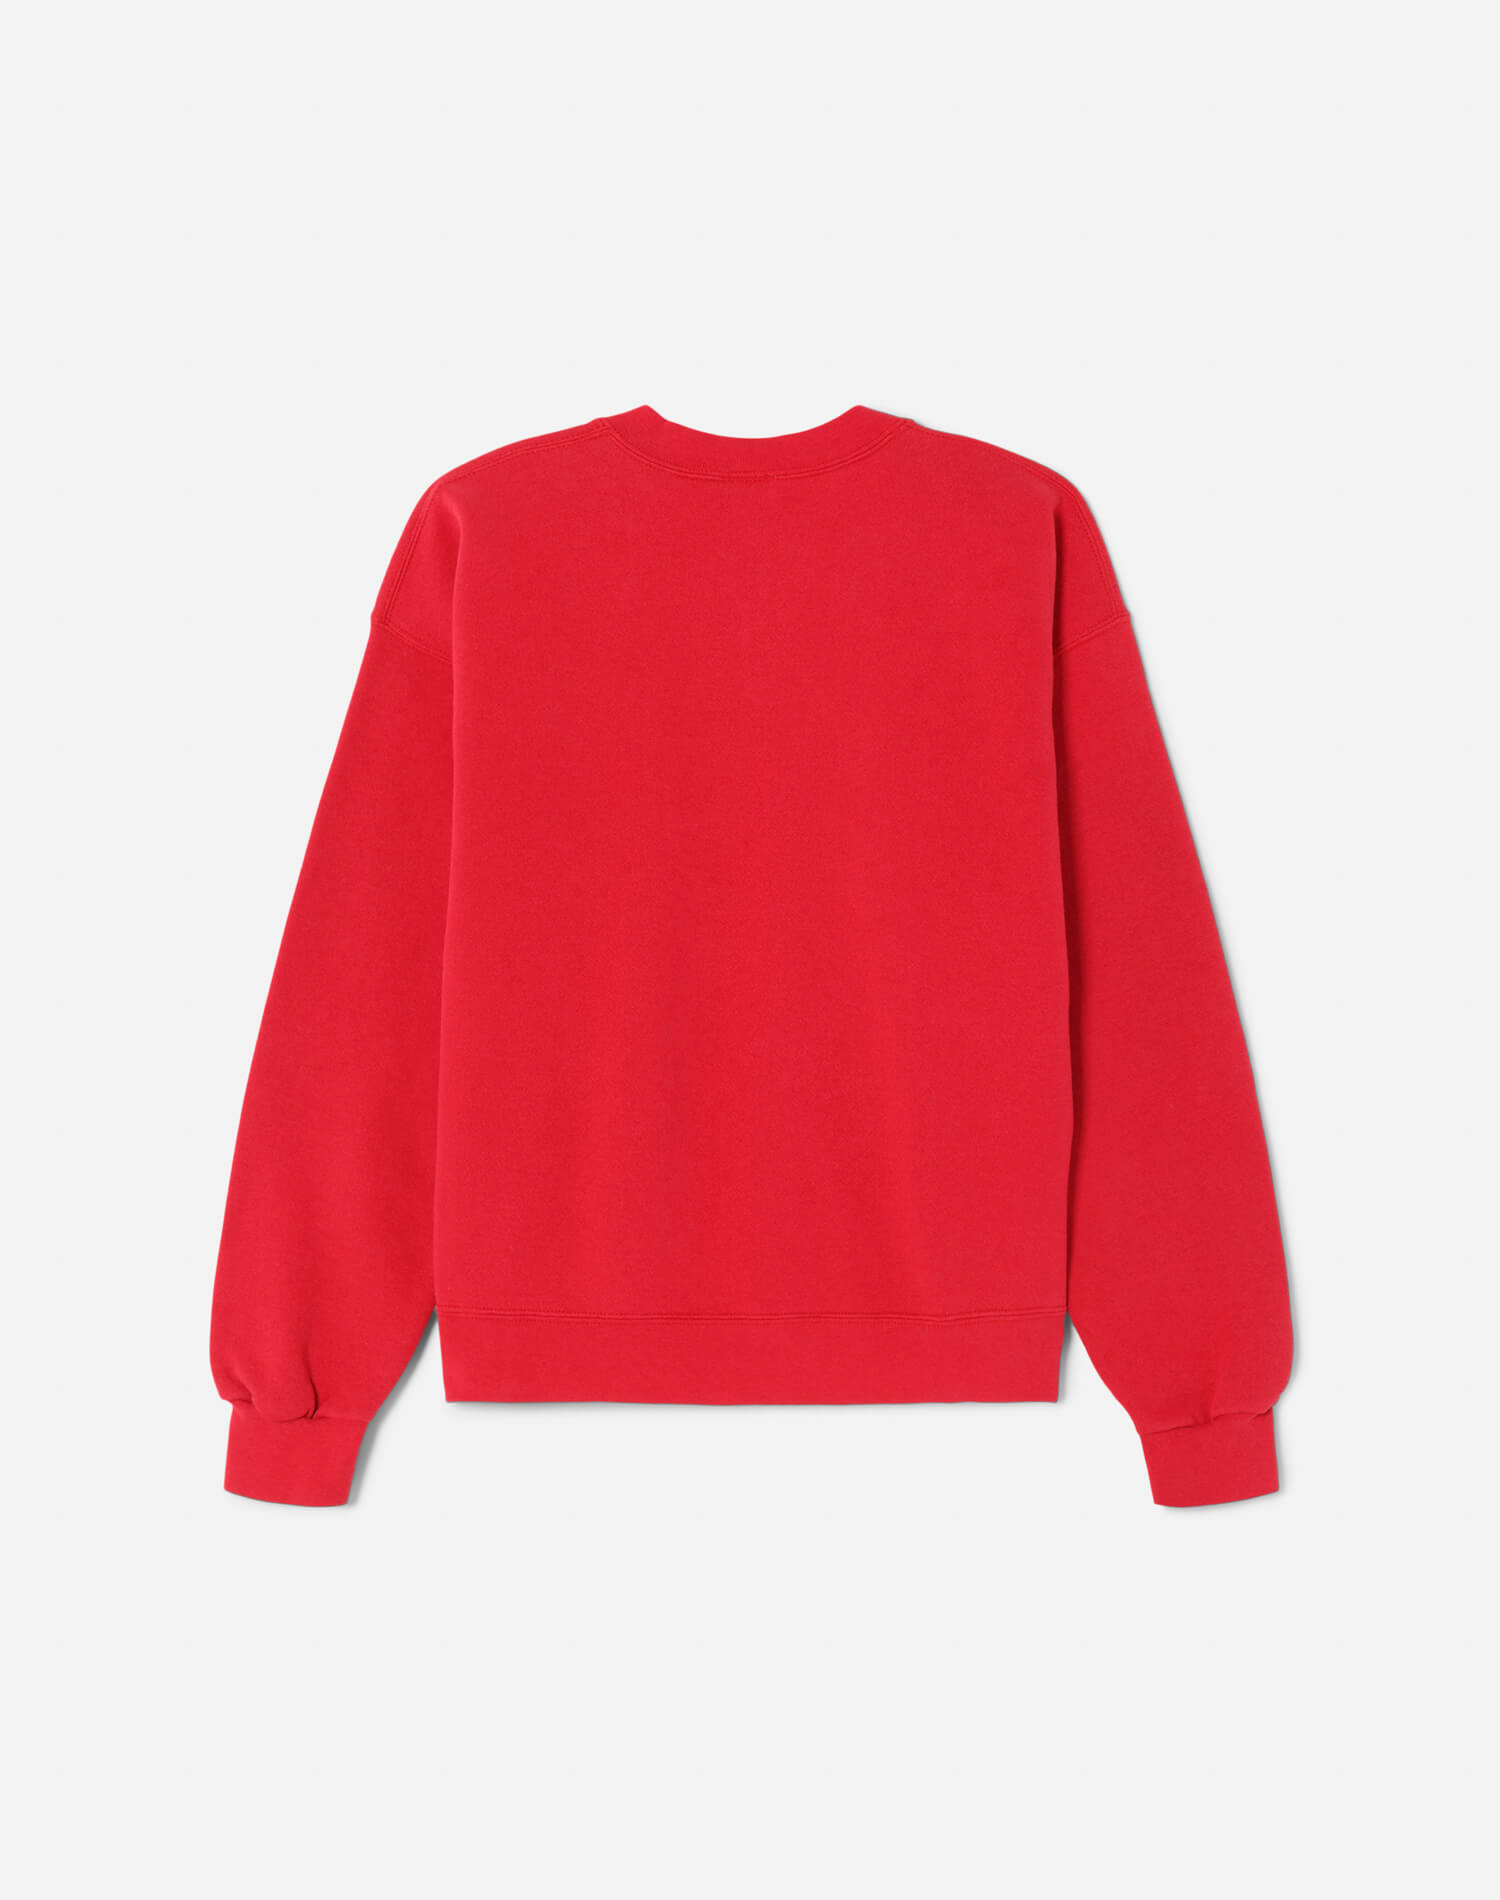 Upcycled "Aspen" Sweatshirt - Red